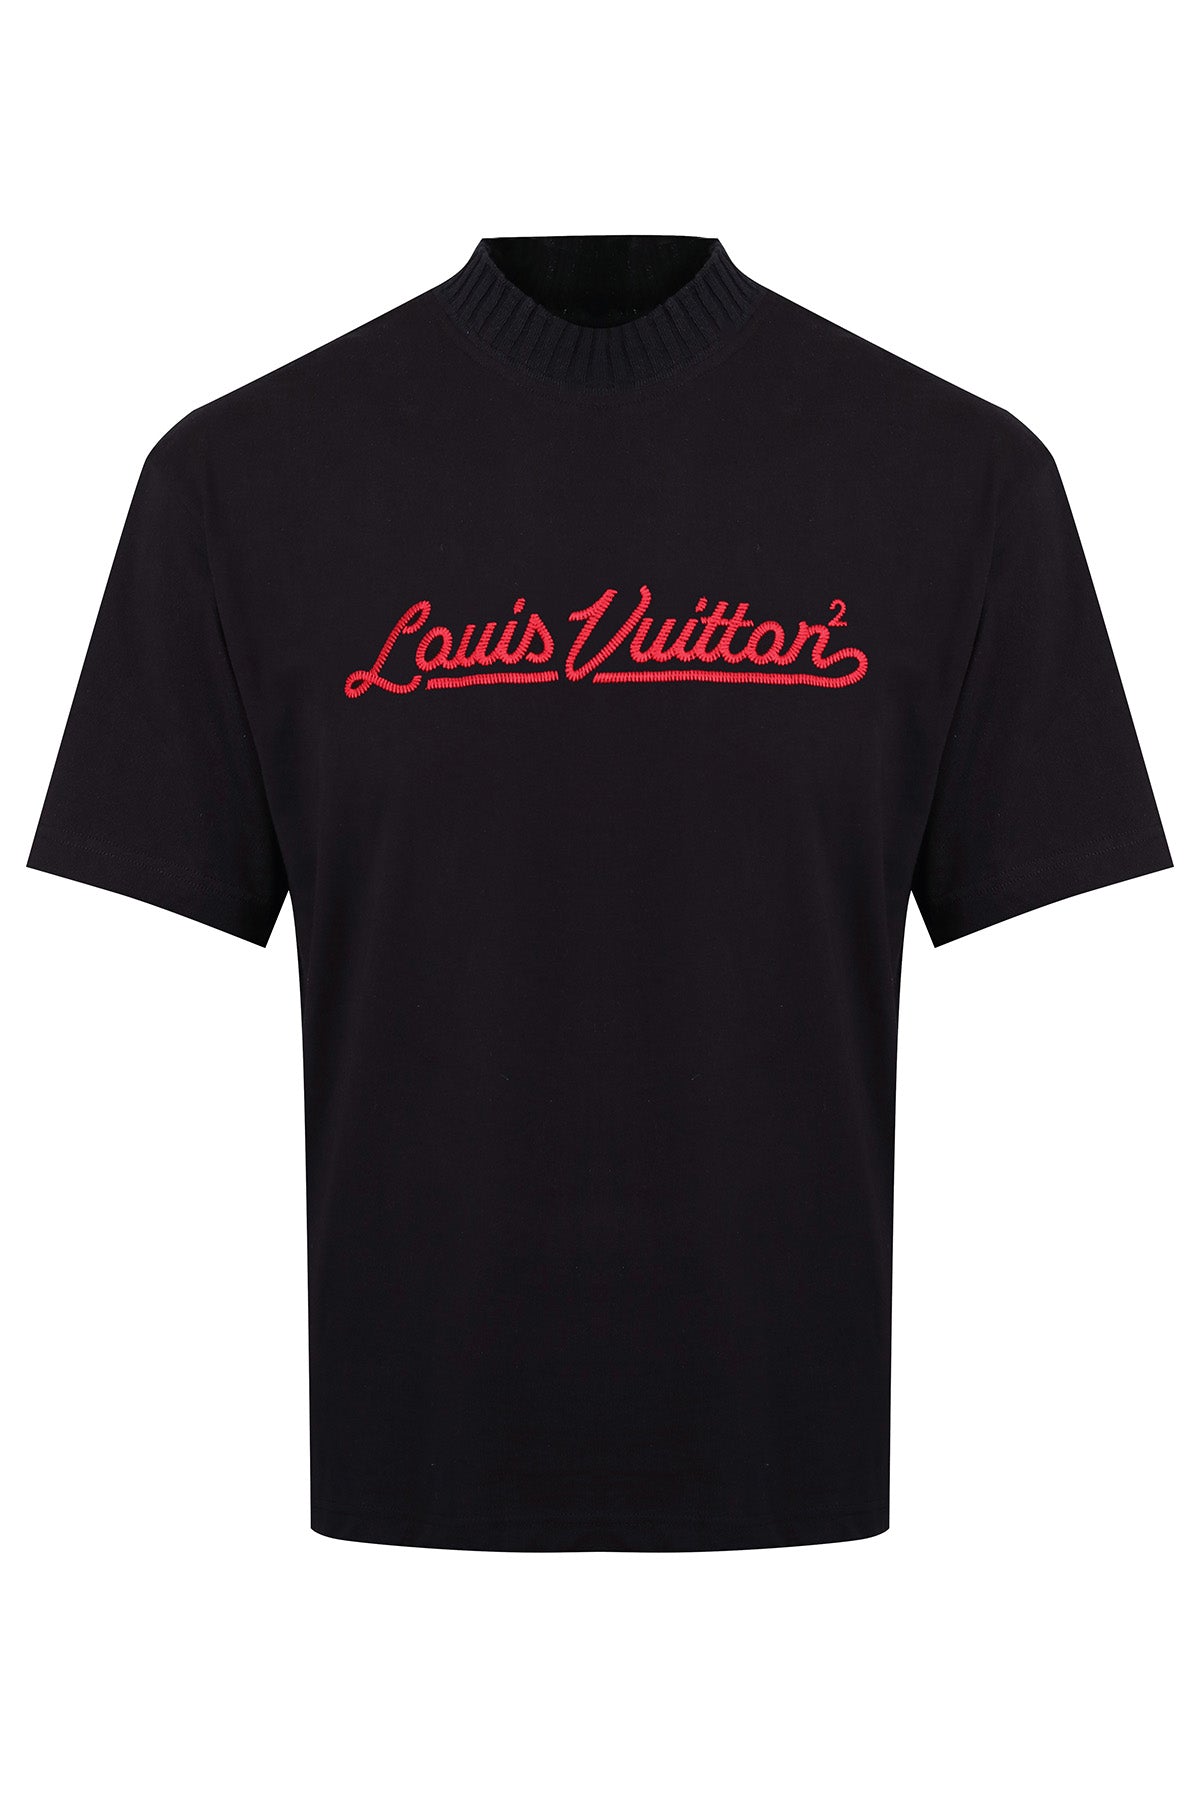 Louis Vuitton, Shirts, Louis Vuitton Mock Next Tshirt